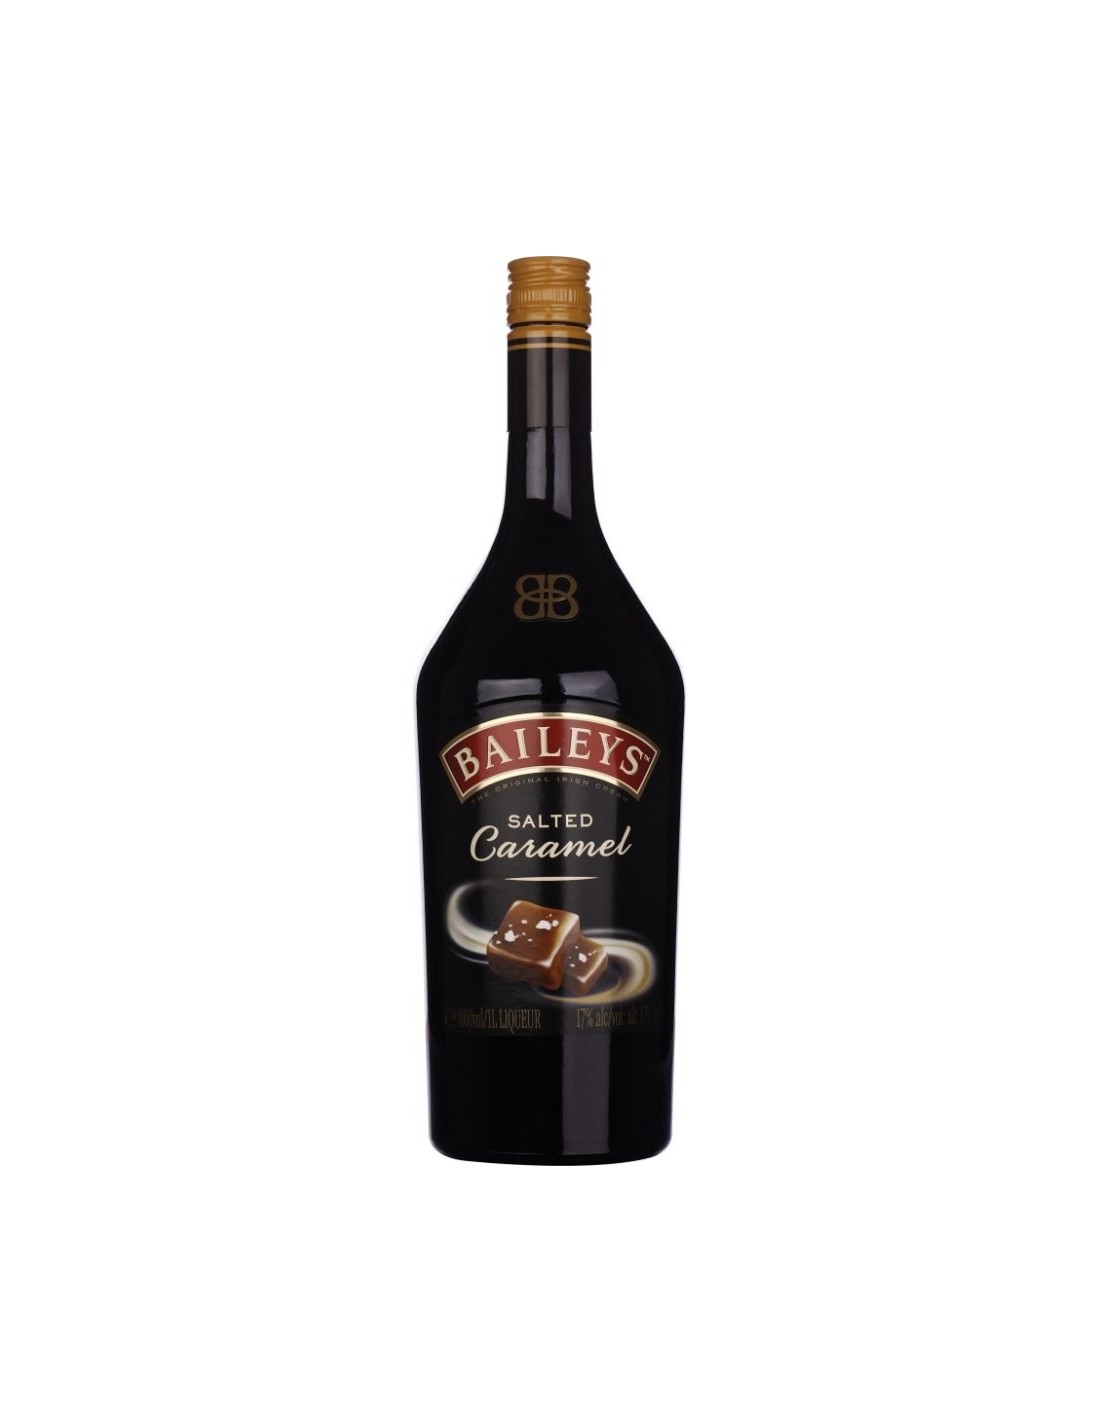 Lichior Baileys Salted Caramel, 17% alc., 1L, Irlanda alcooldiscount.ro